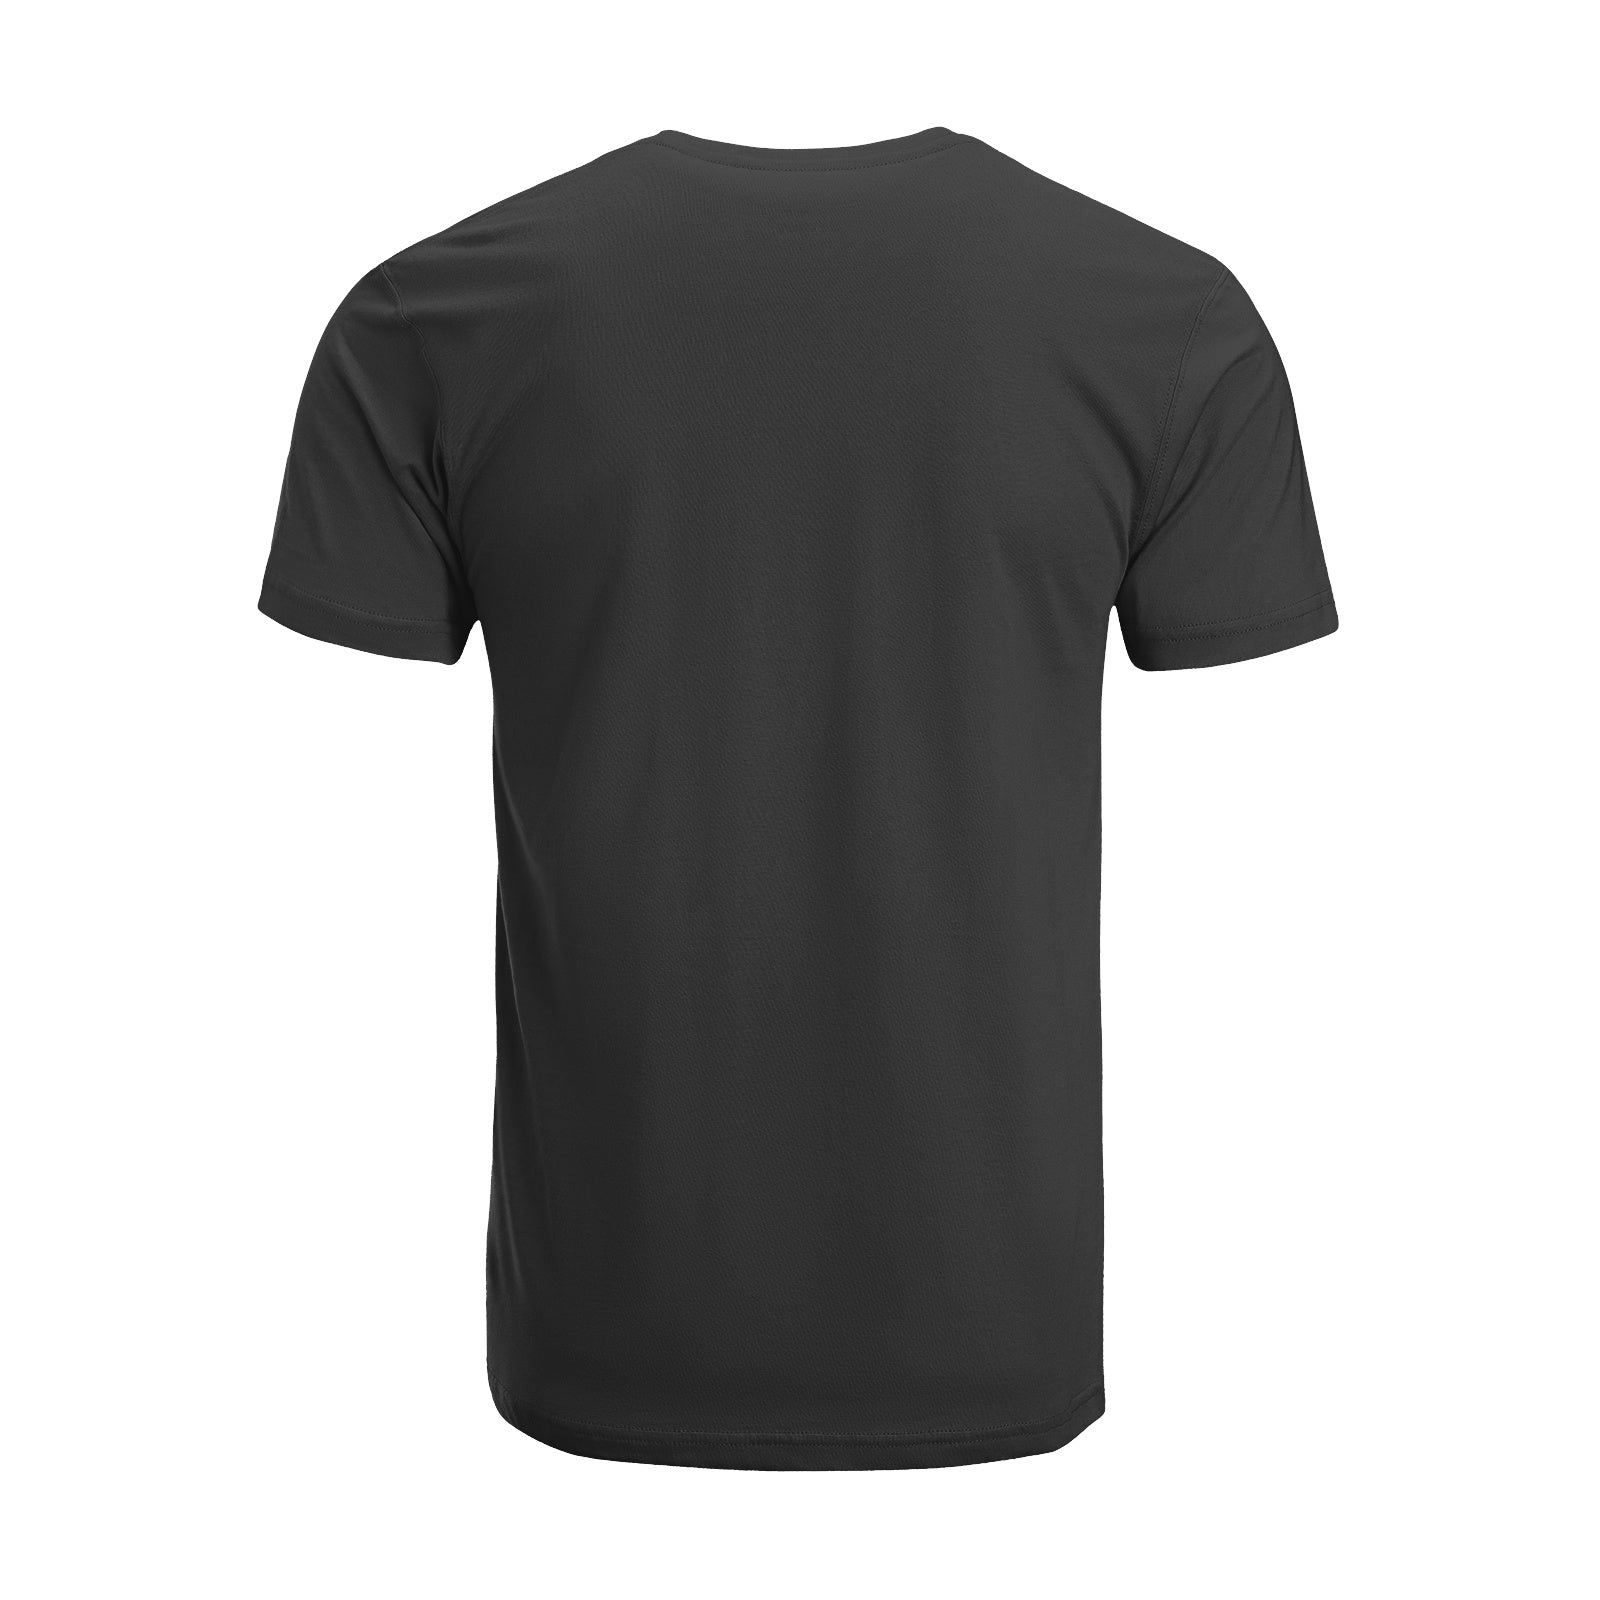 Unisex Short Sleeve Crew Neck Cotton Jersey T-Shirt Gym No. 27 - Tara-Outfits.com